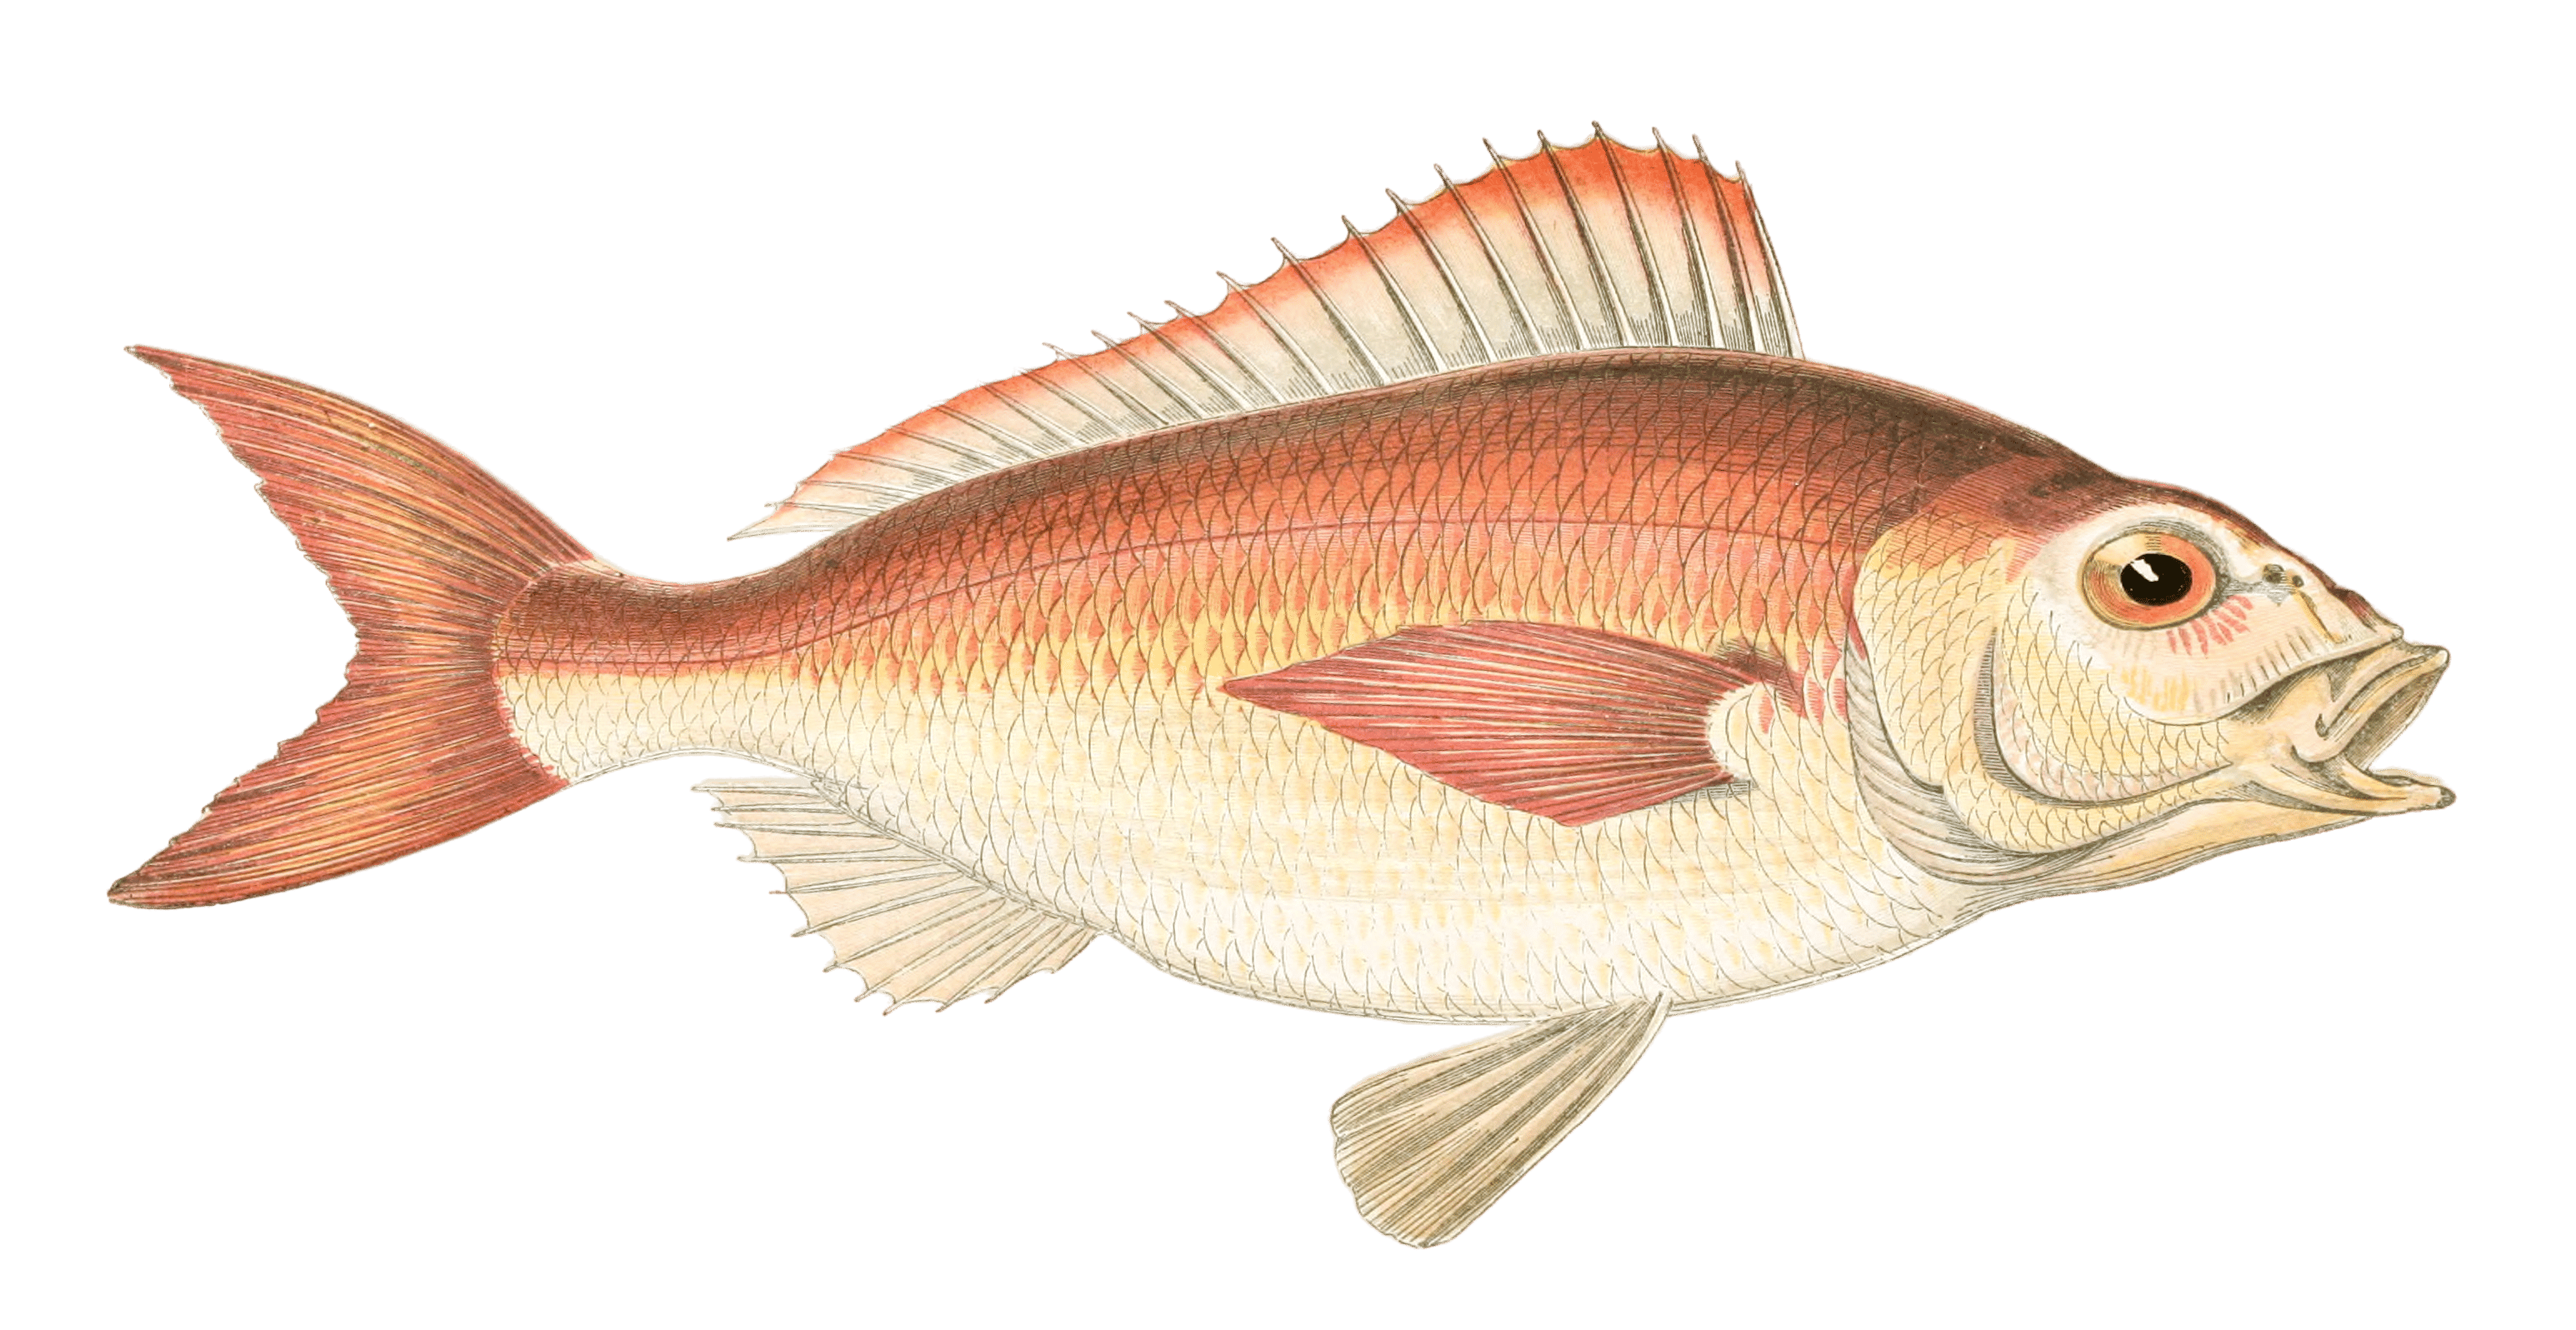 Spanish Bream Fish Vintage Illustration